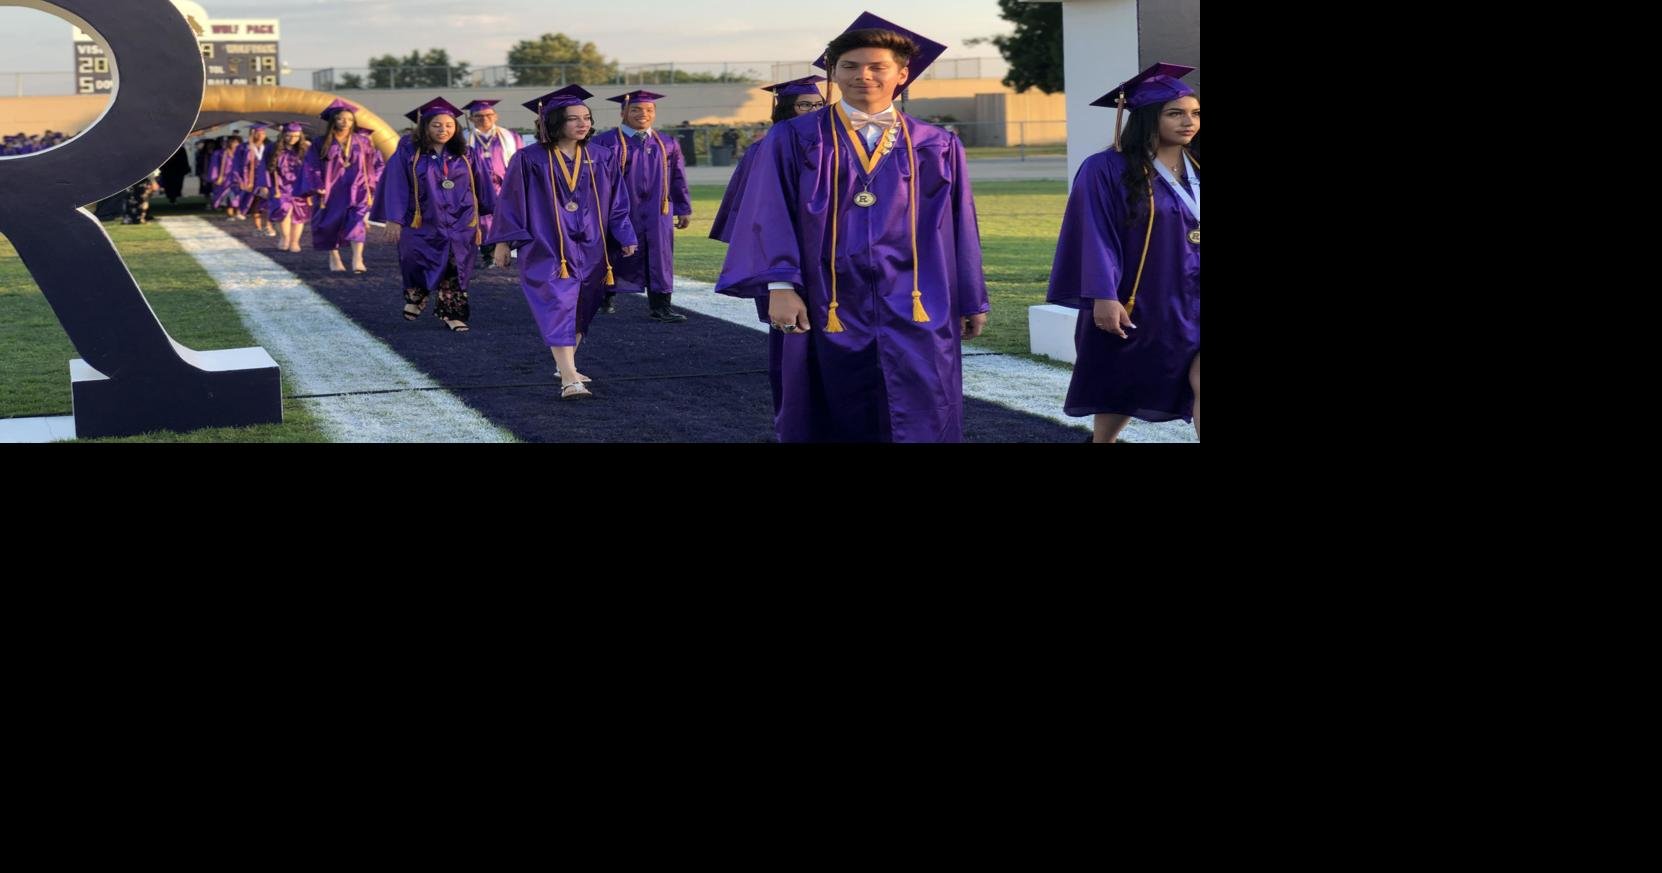 PHOTO GALLERY Ridgeview High School graduation 2019 Multimedia